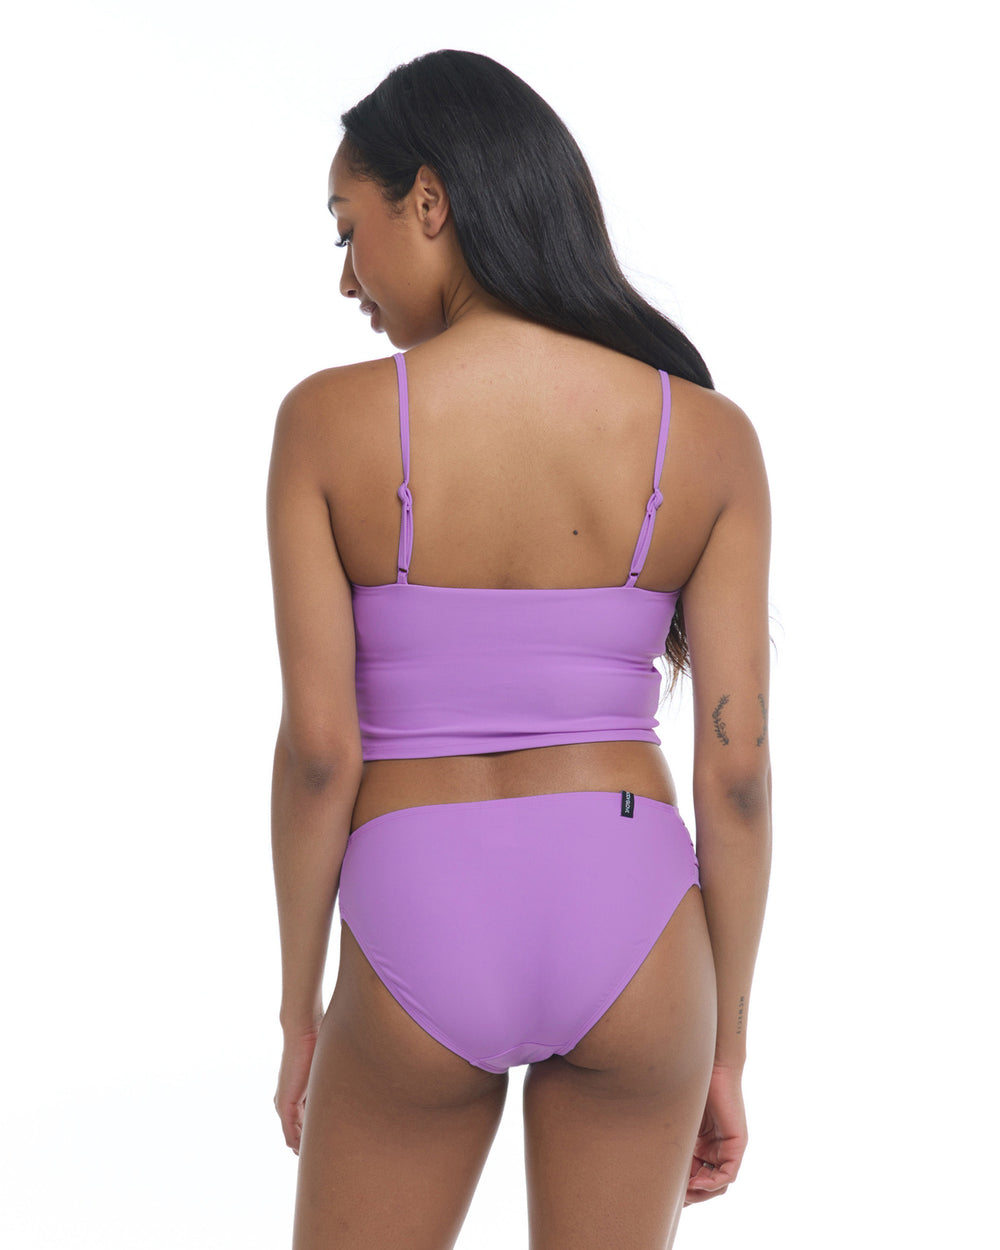 Kohls Apt 9 Ladies Halter Push-Up Padded Swim Top Swimsuit Separate Purple  SZ 14